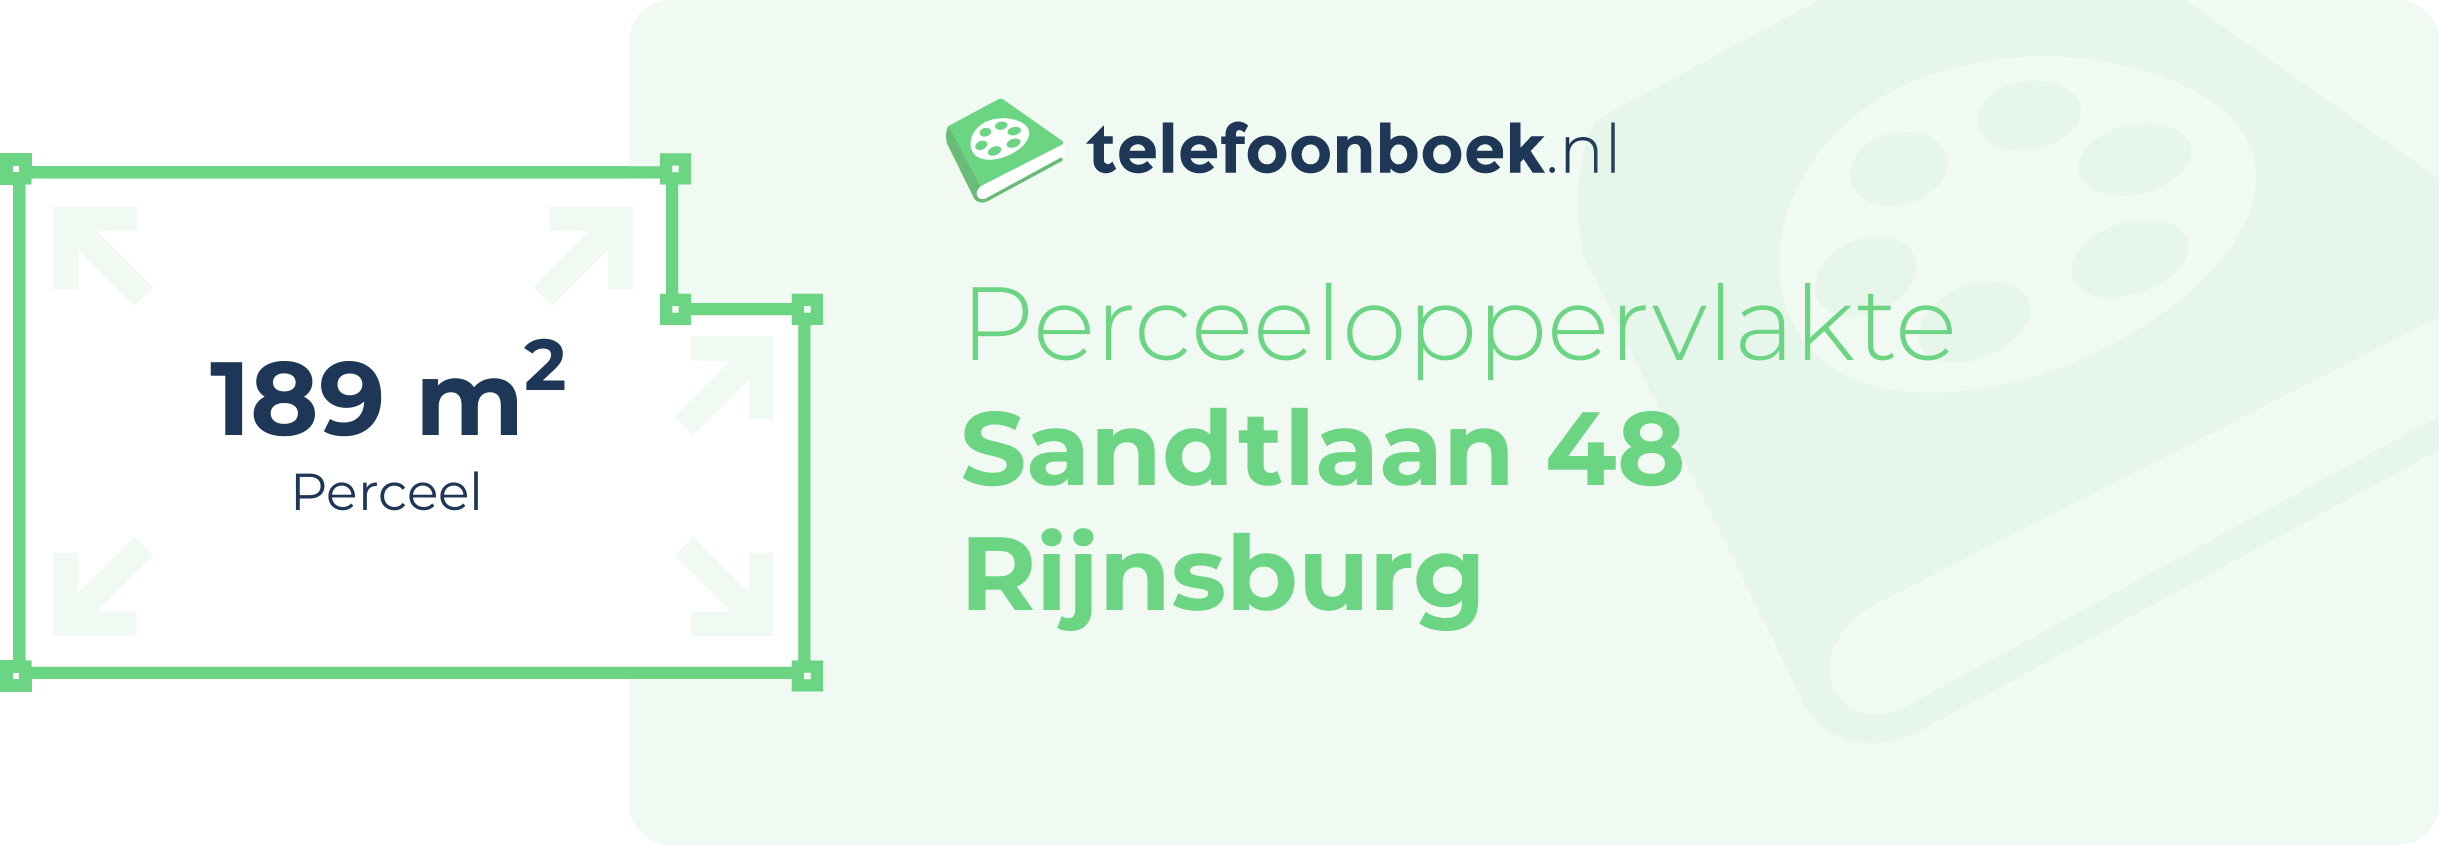 Perceeloppervlakte Sandtlaan 48 Rijnsburg